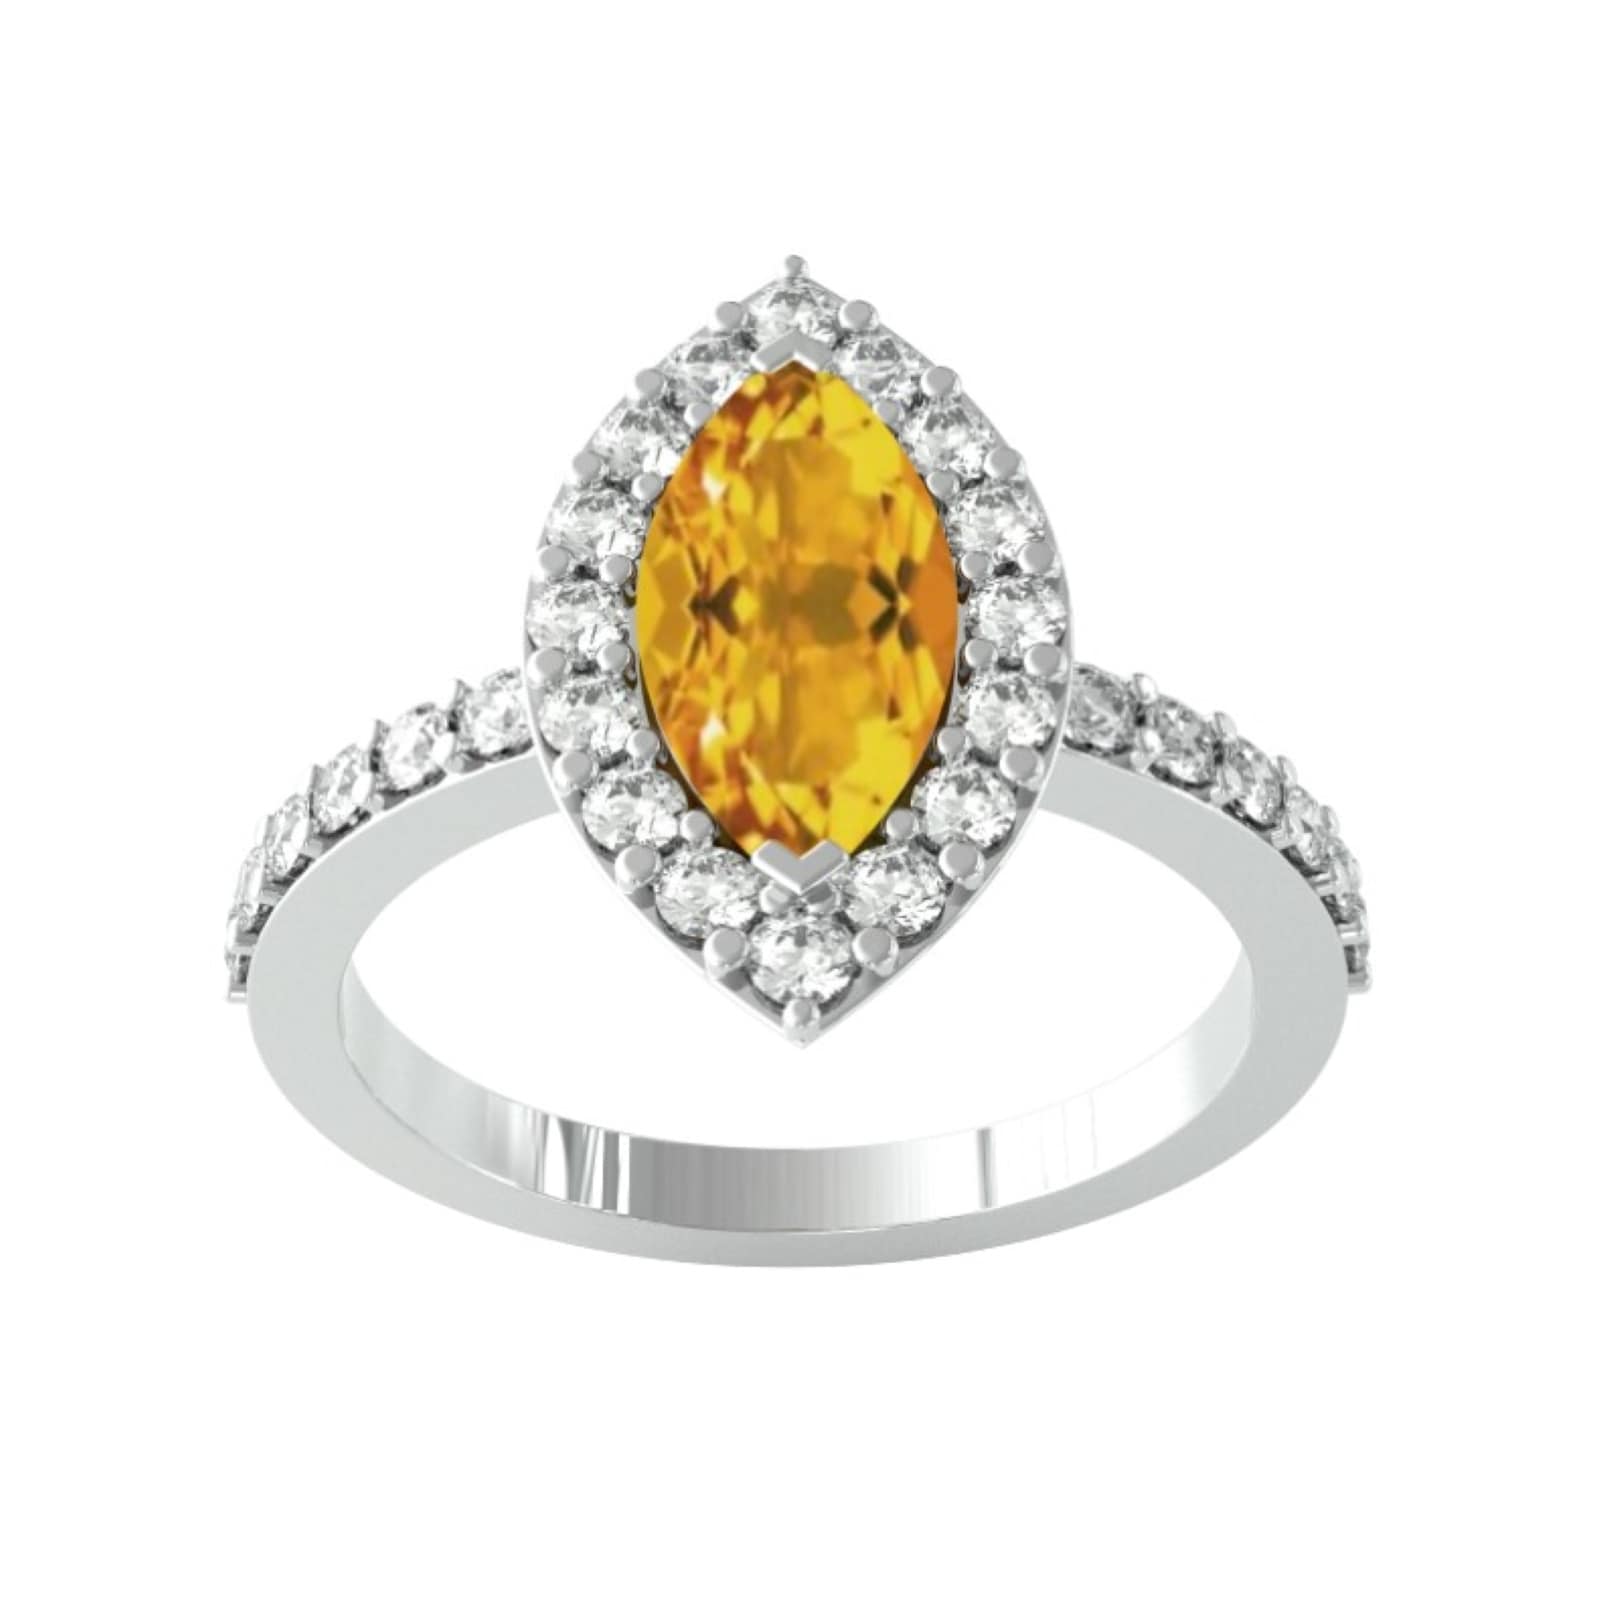 9ct White Gold Marquise Cut Citrine & Diamond Ring - Ring Size Q.5